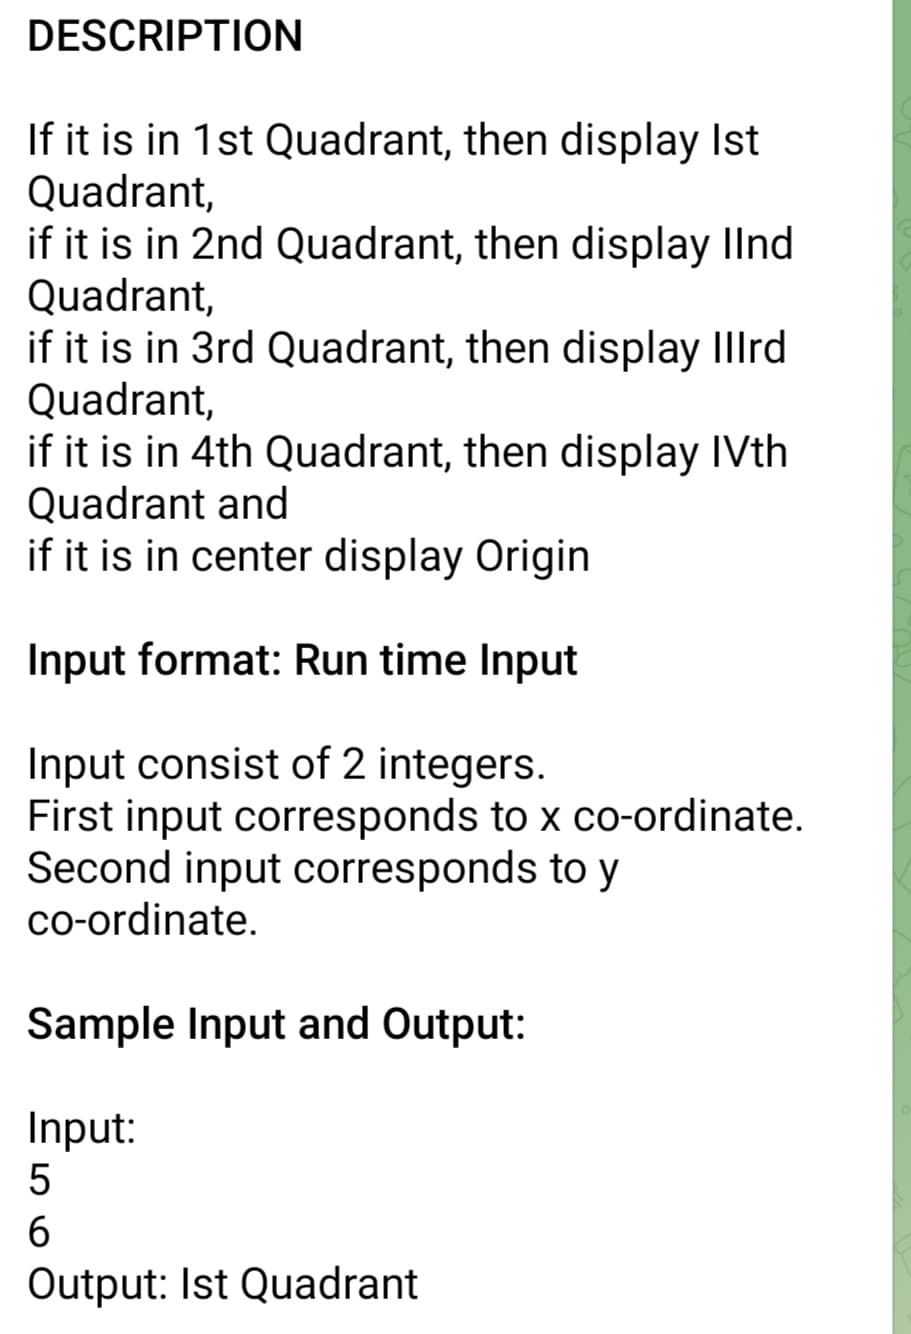 DESCRIPTION
If it is in 1st Quadrant, then display Ist
Quadrant,
if it is in 2nd Quadrant, then display Ilnd
Quadrant,
if it is in 3rd Quadrant, then display Illrd
Quadrant,
if it is in 4th Quadrant, then display IVth
Quadrant and
if it is in center display Origin
Input format: Run time Input
Input consist of 2 integers.
First input corresponds to x co-ordinate.
Second input corresponds to y
co-ordinate.
Sample Input and Output:
Input:
5
6
Output: Ist Quadrant